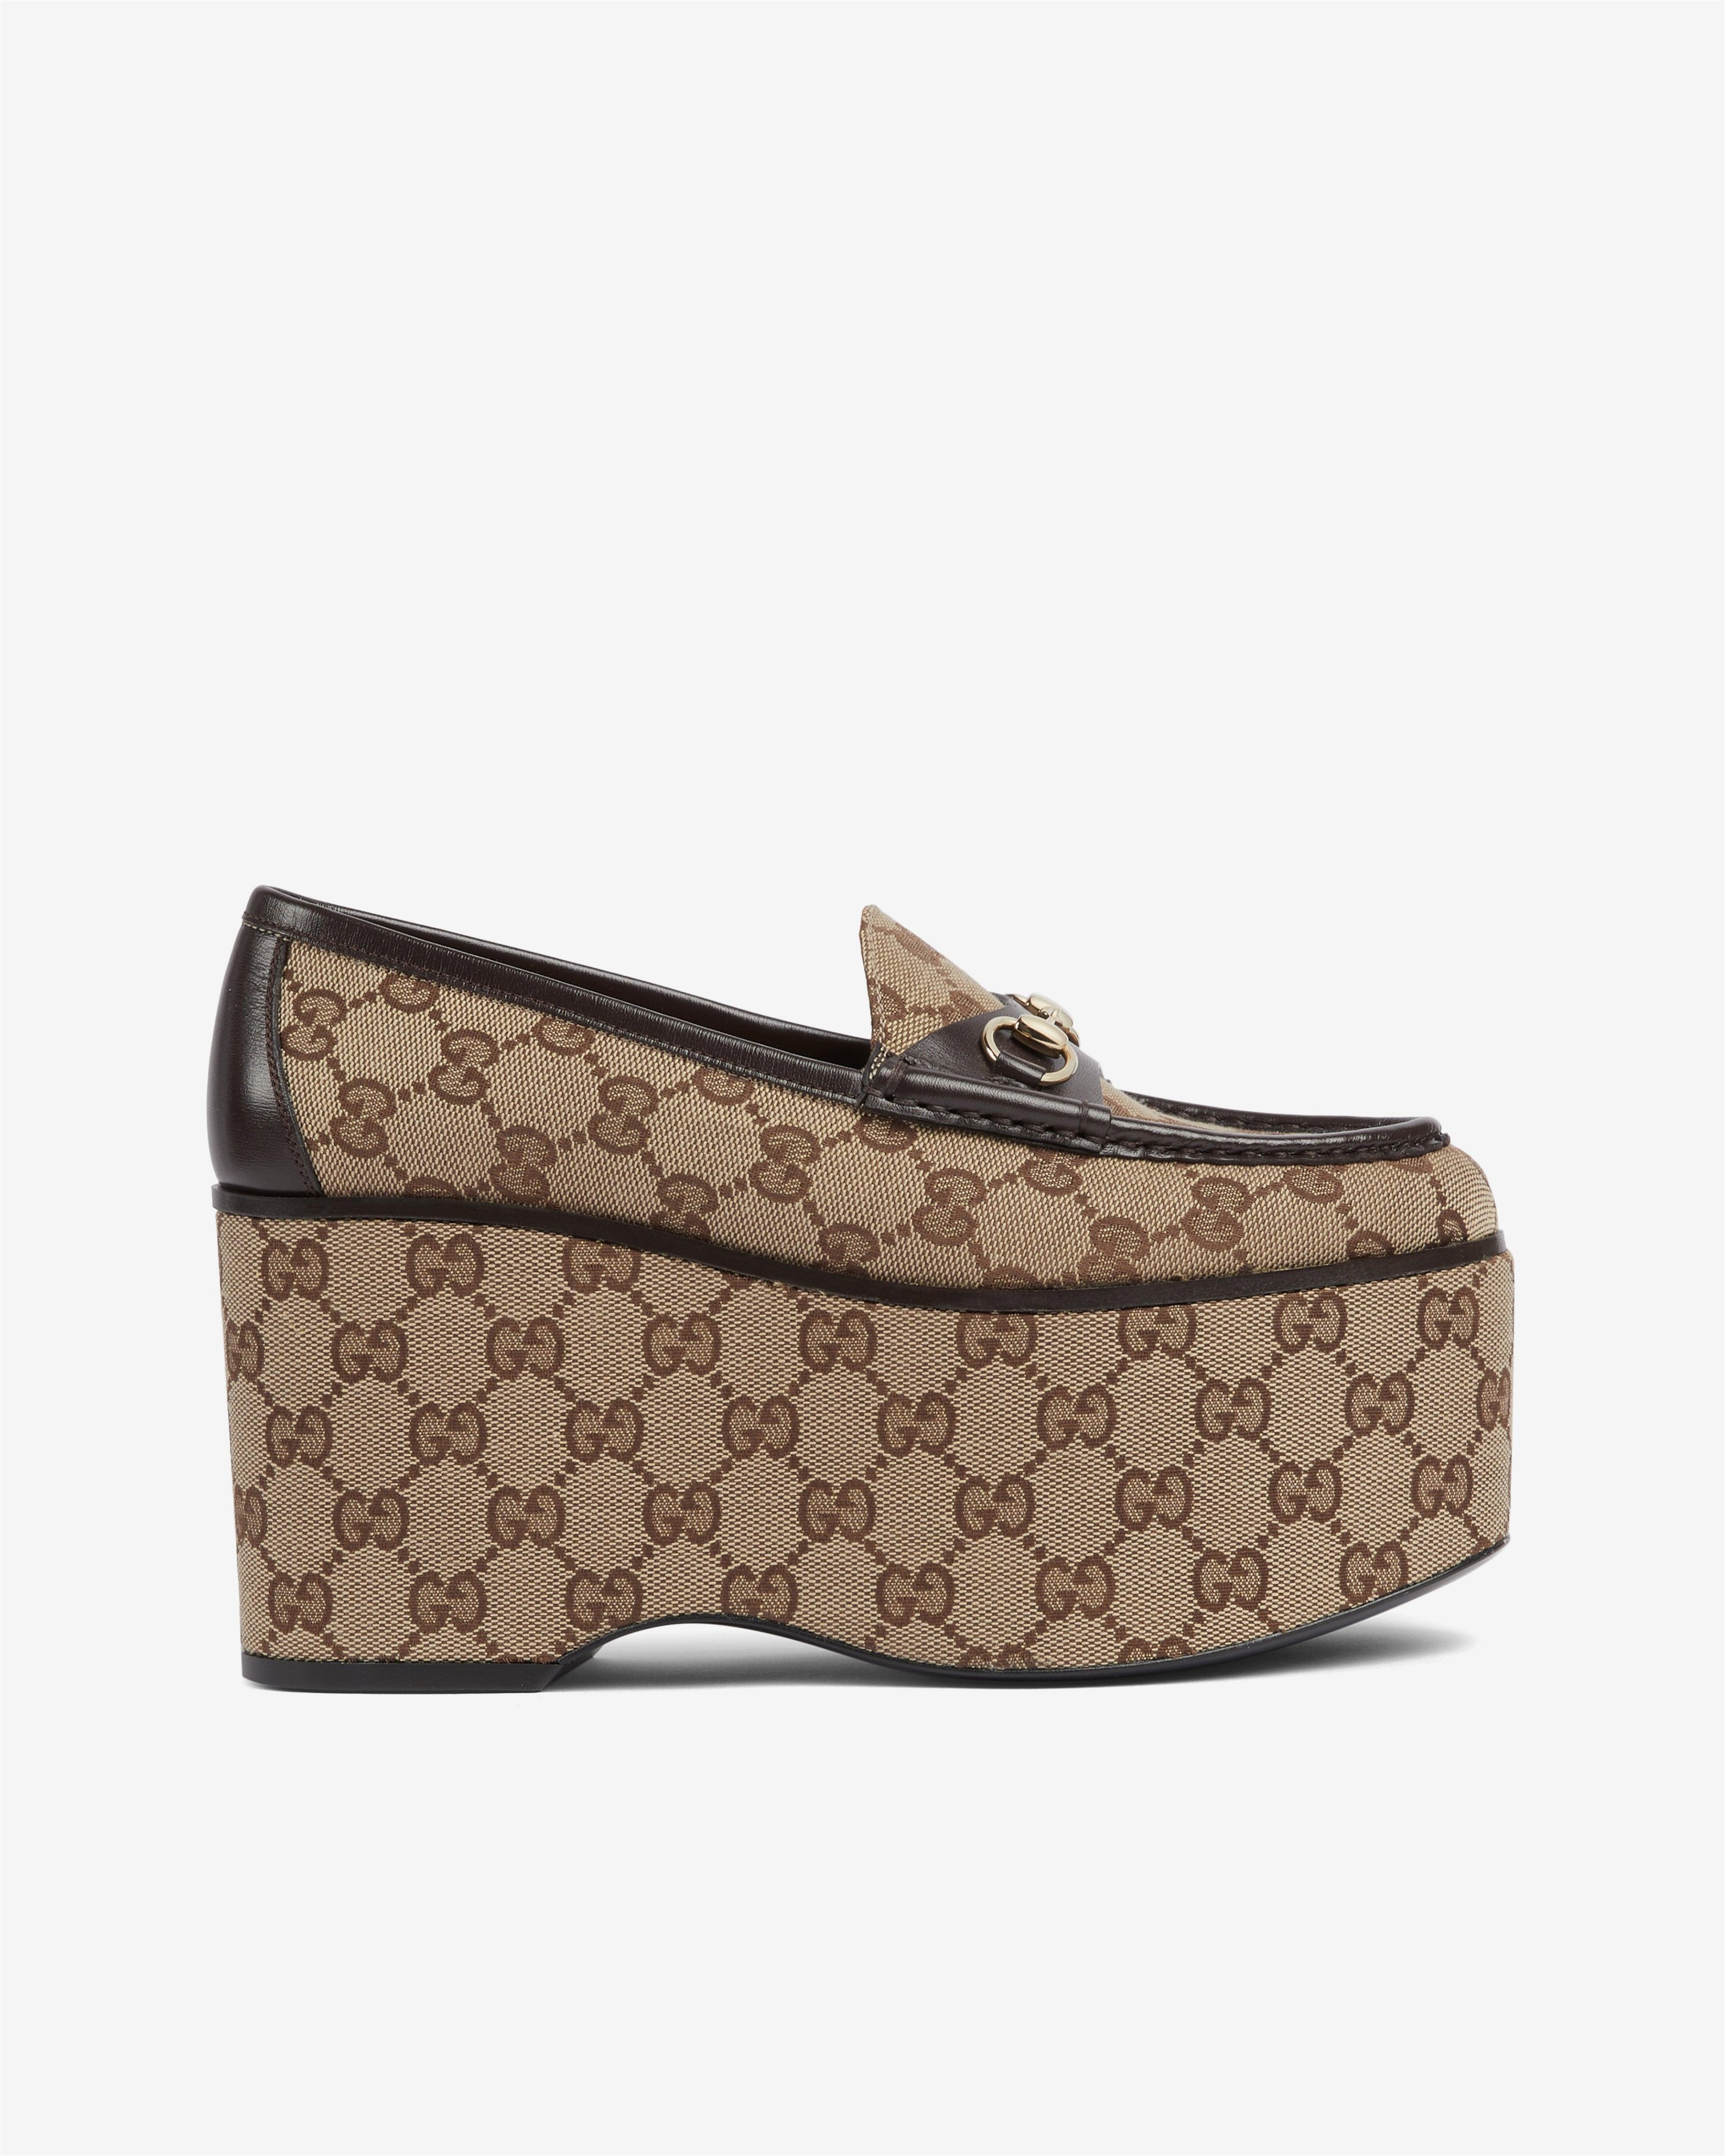 Gucci - Women's Horsebit Platform Loafer - (Beige) by GUCCI